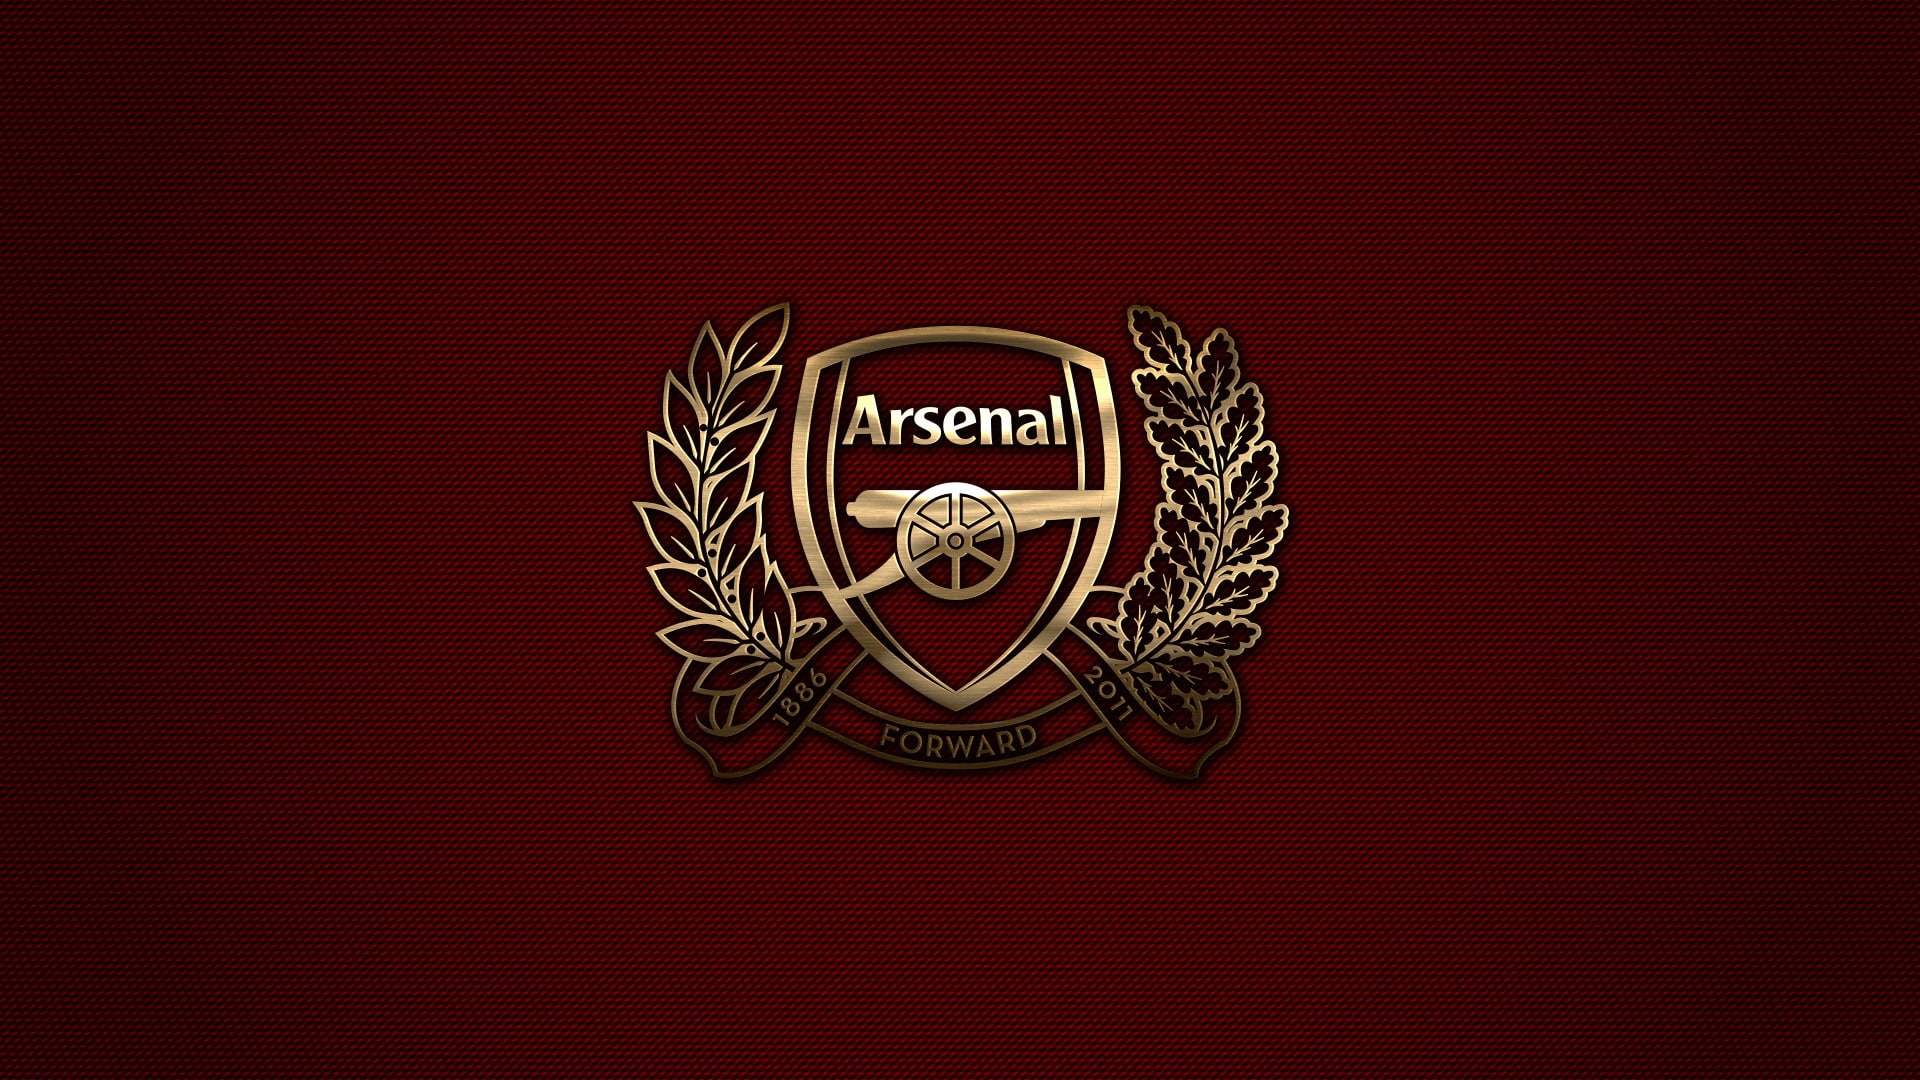 Arsenal London, Arsenal Fc, Premier League, sports club, red